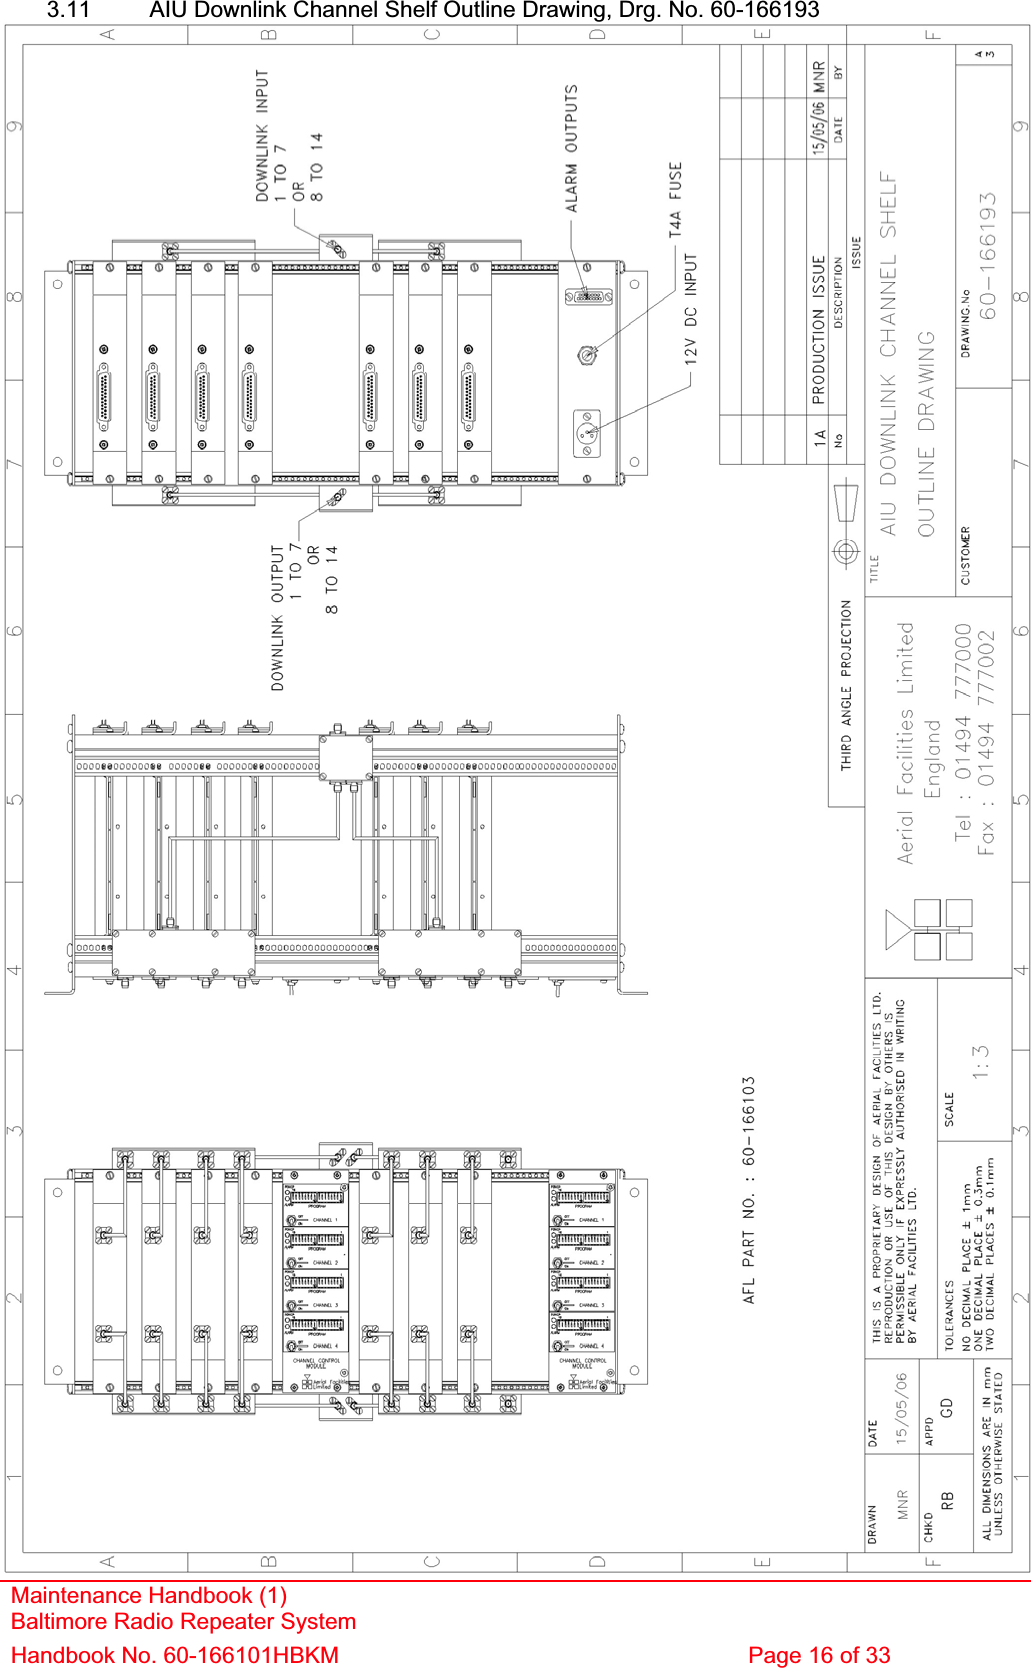 3.11  AIU Downlink Channel Shelf Outline Drawing, Drg. No. 60-166193 Maintenance Handbook (1) Baltimore Radio Repeater System Handbook No. 60-166101HBKM  Page 16 of 33 